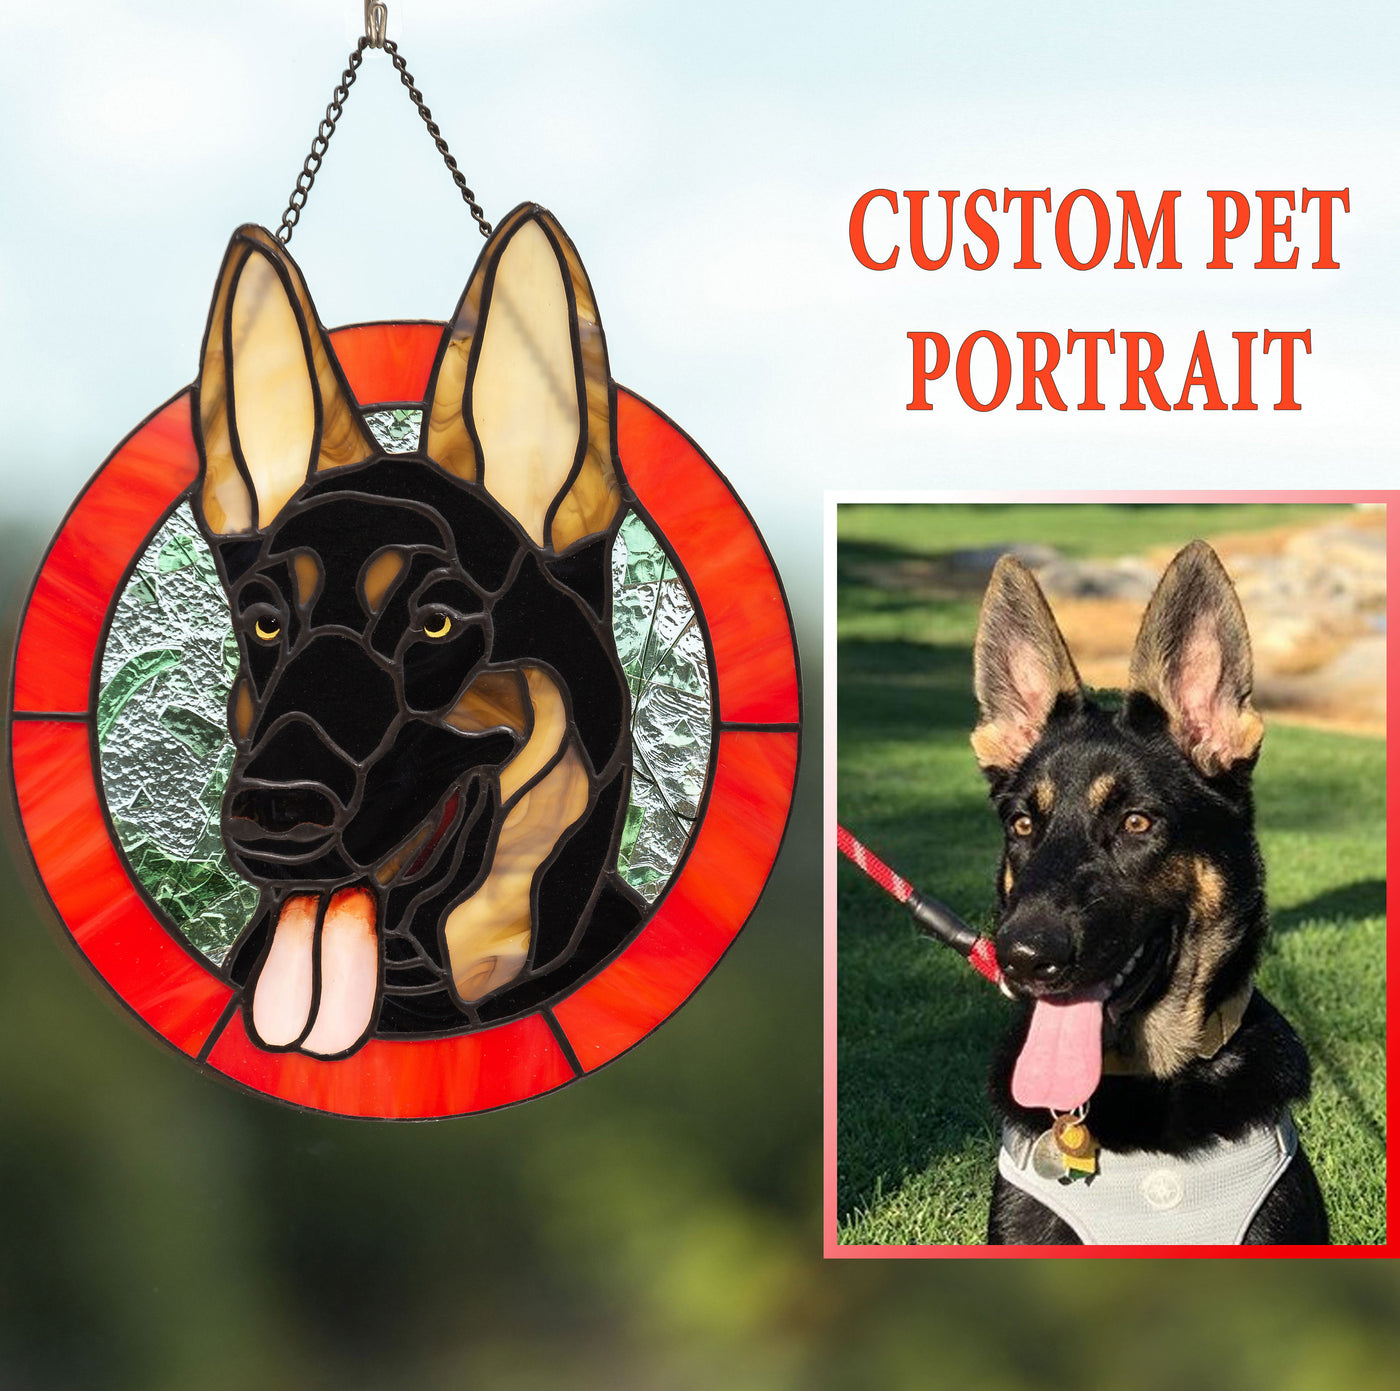 Stained glass pet portrait depicting German shepherd dog